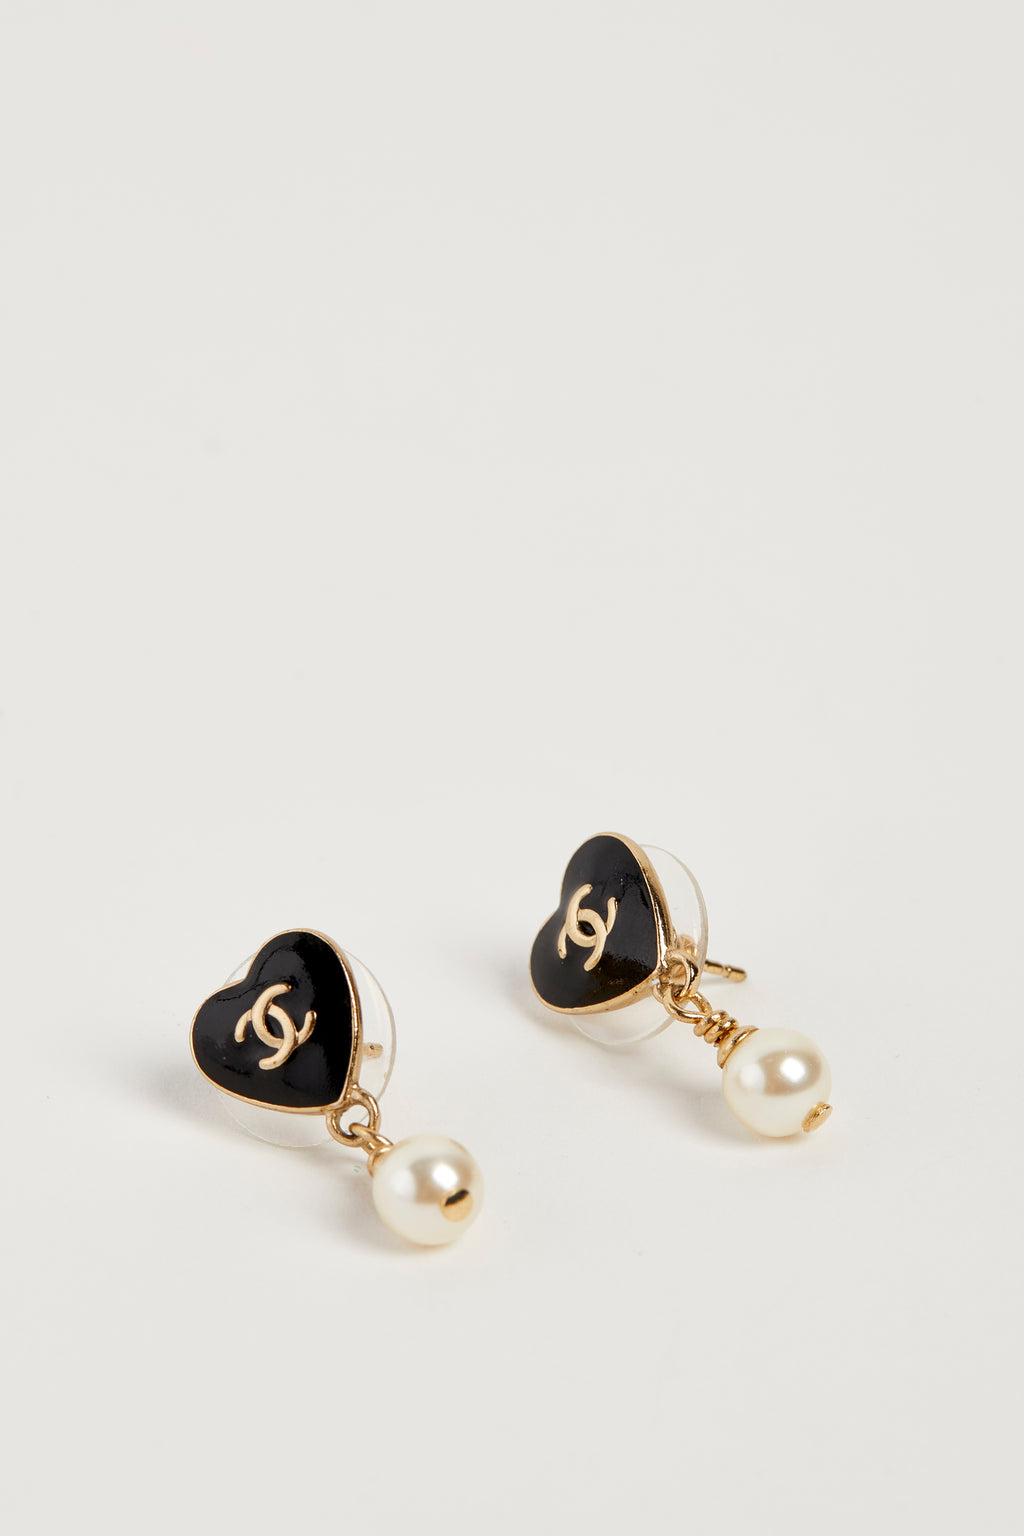 Vintage Chanel Mini Heart Earrings with Pearl Drop